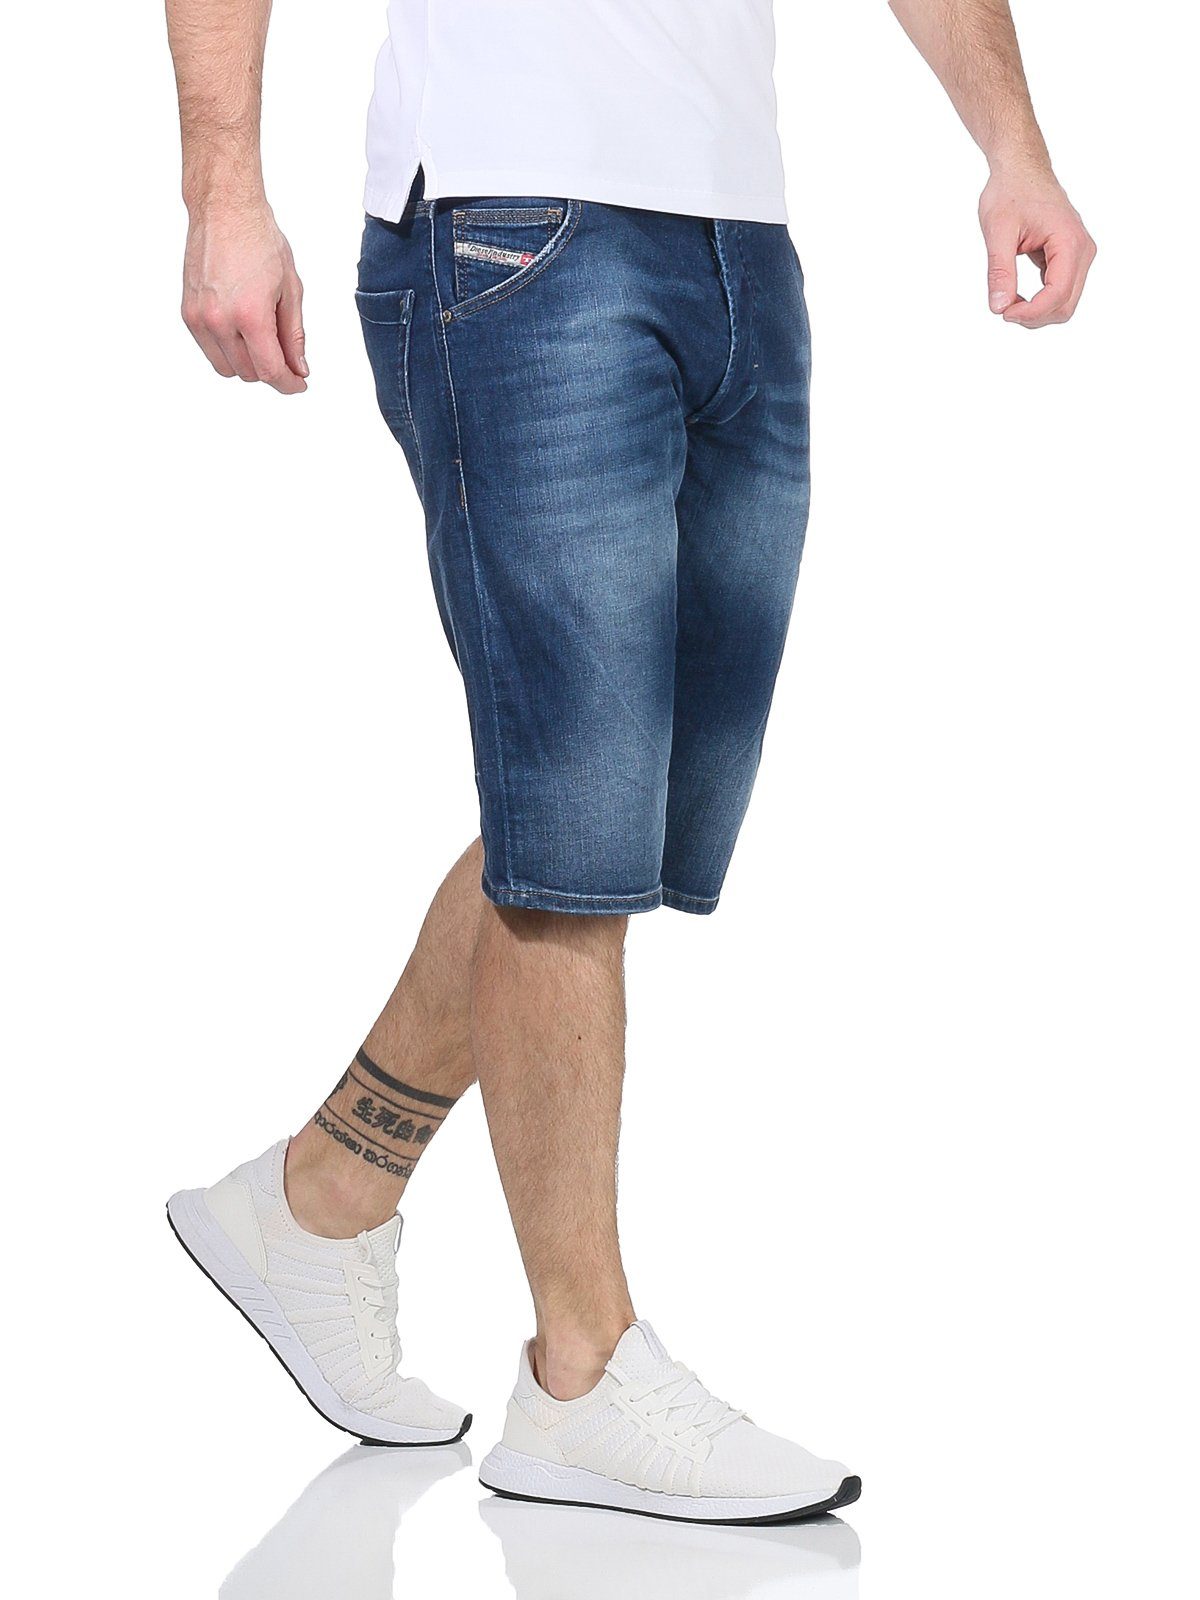 Shorts Kroshort Hose RG48R Diesel Herren RG48R dezenter kurze Blau Jeansshorts Shorts, Jeans Used-Look